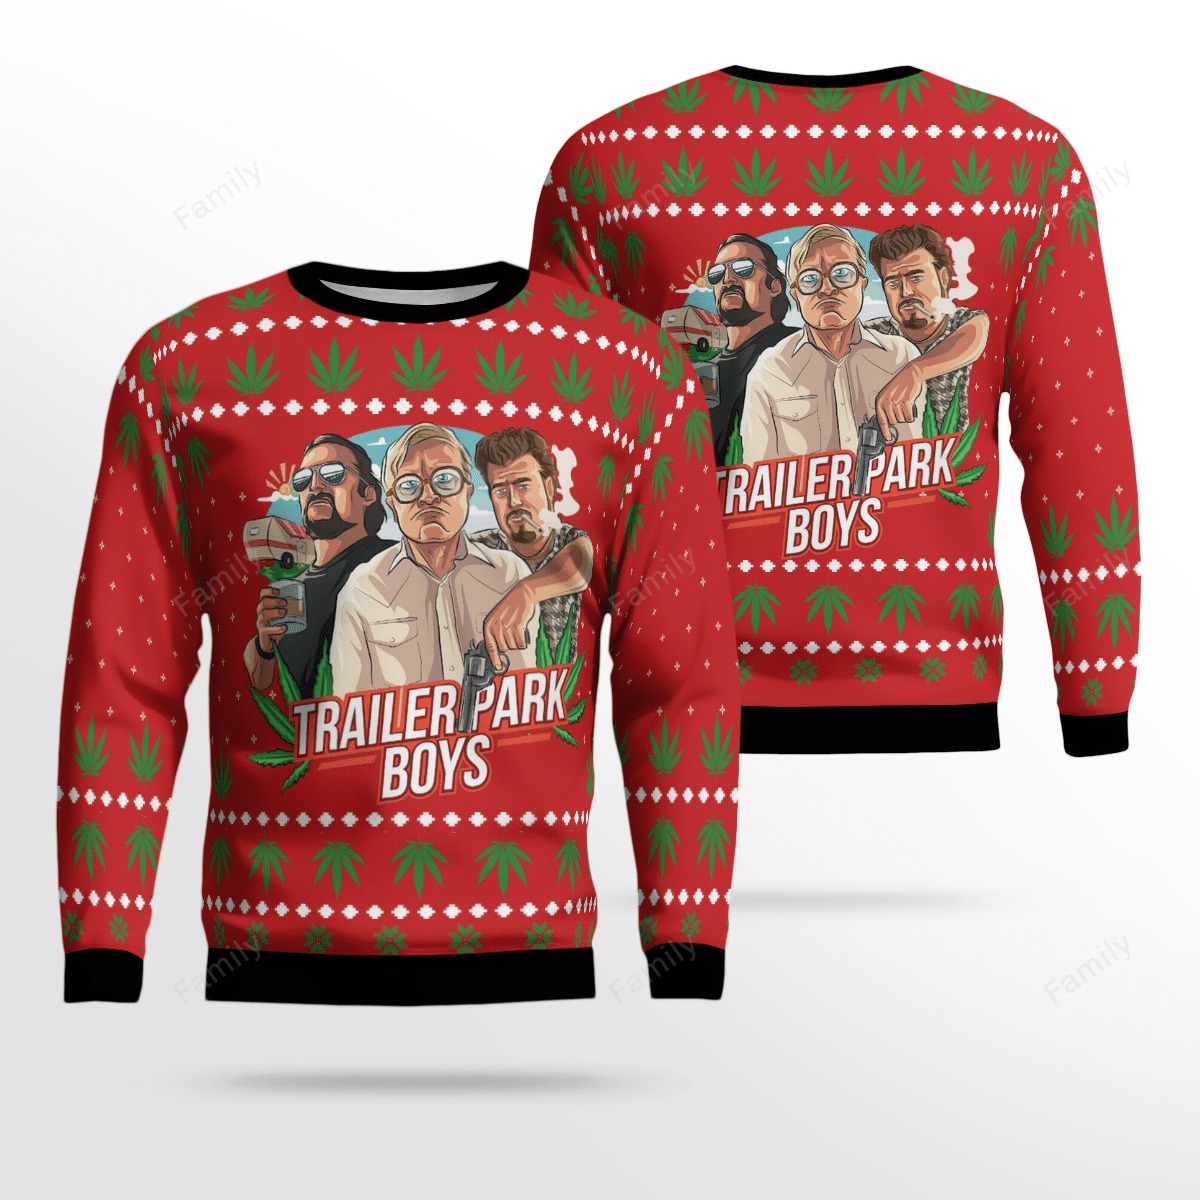 Trailer Park Boys weed christmas sweater – Saleoff 241121